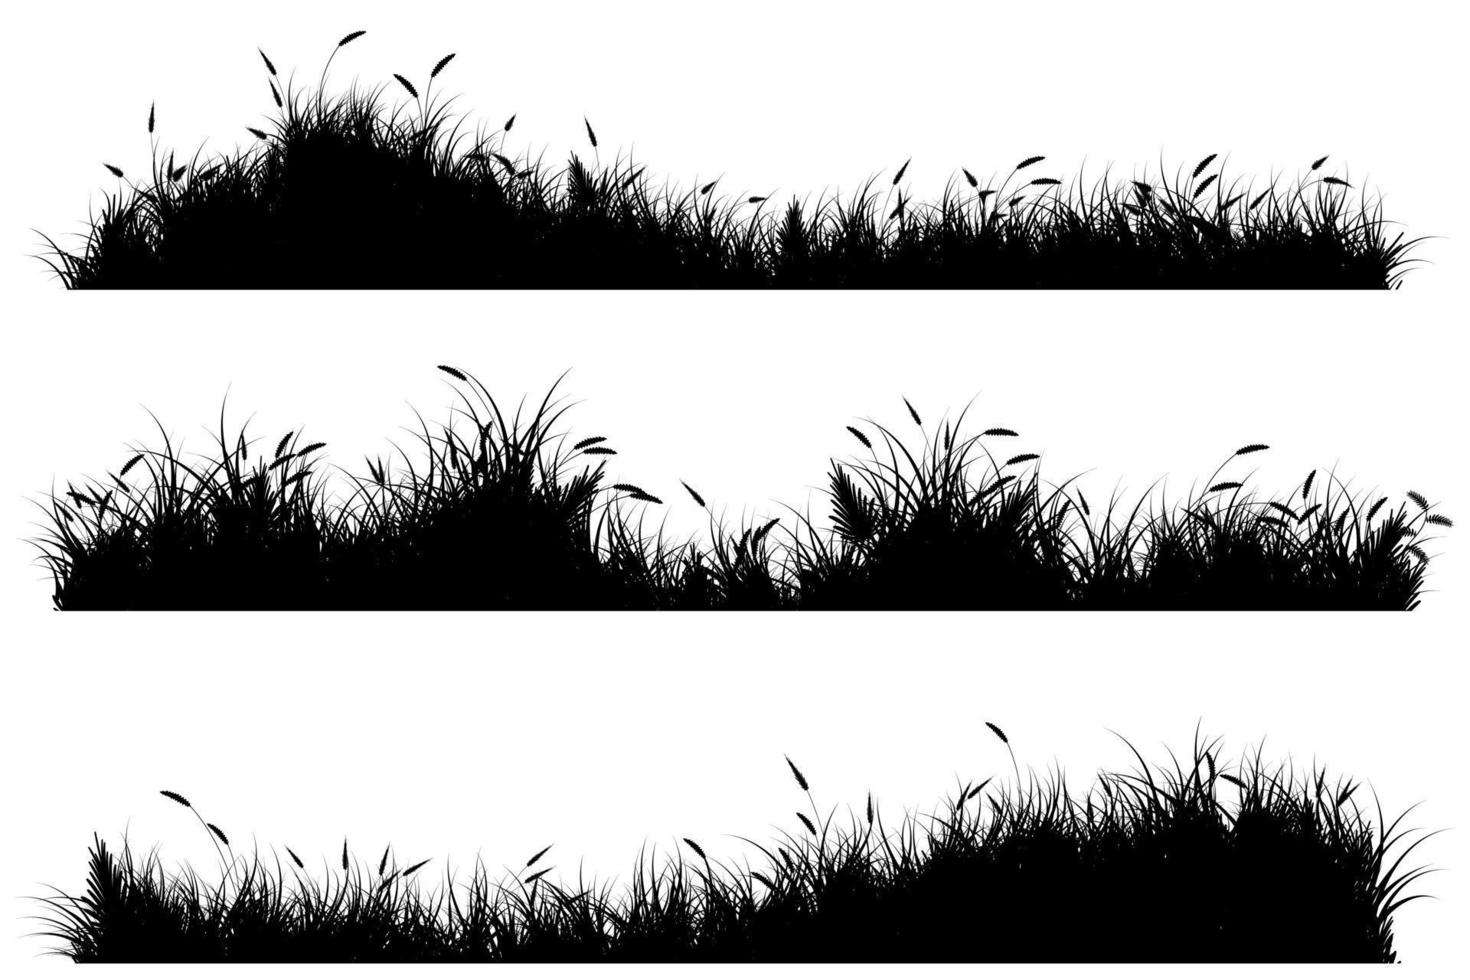 grassy silhouette, grass field vector